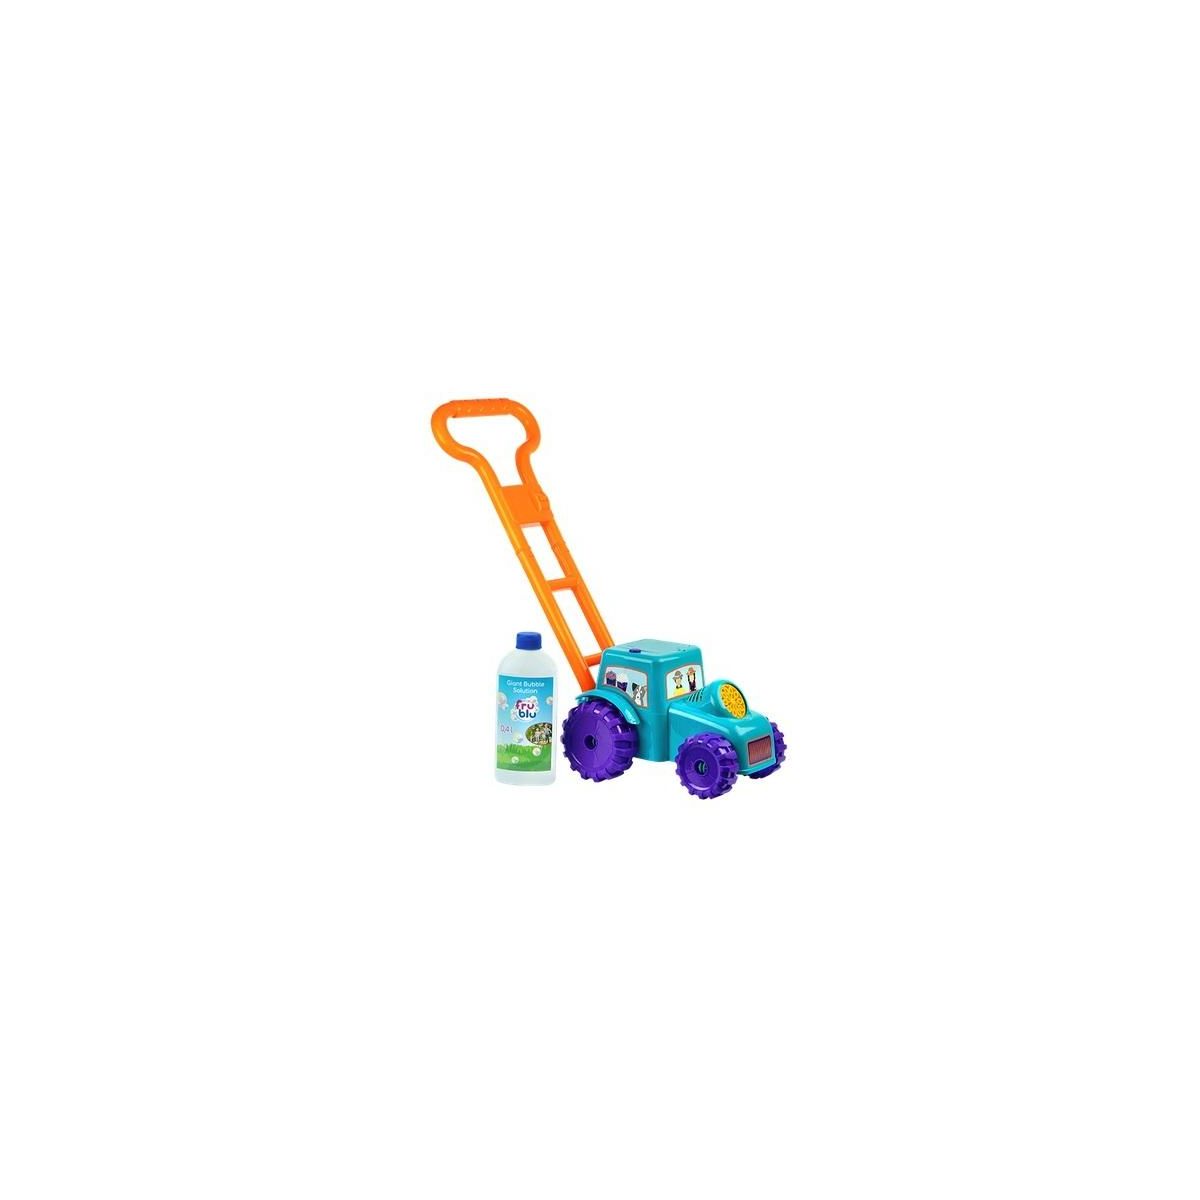 Bańki mydlane traktor + płyn 0,4l Tm Toys (DKF0397)